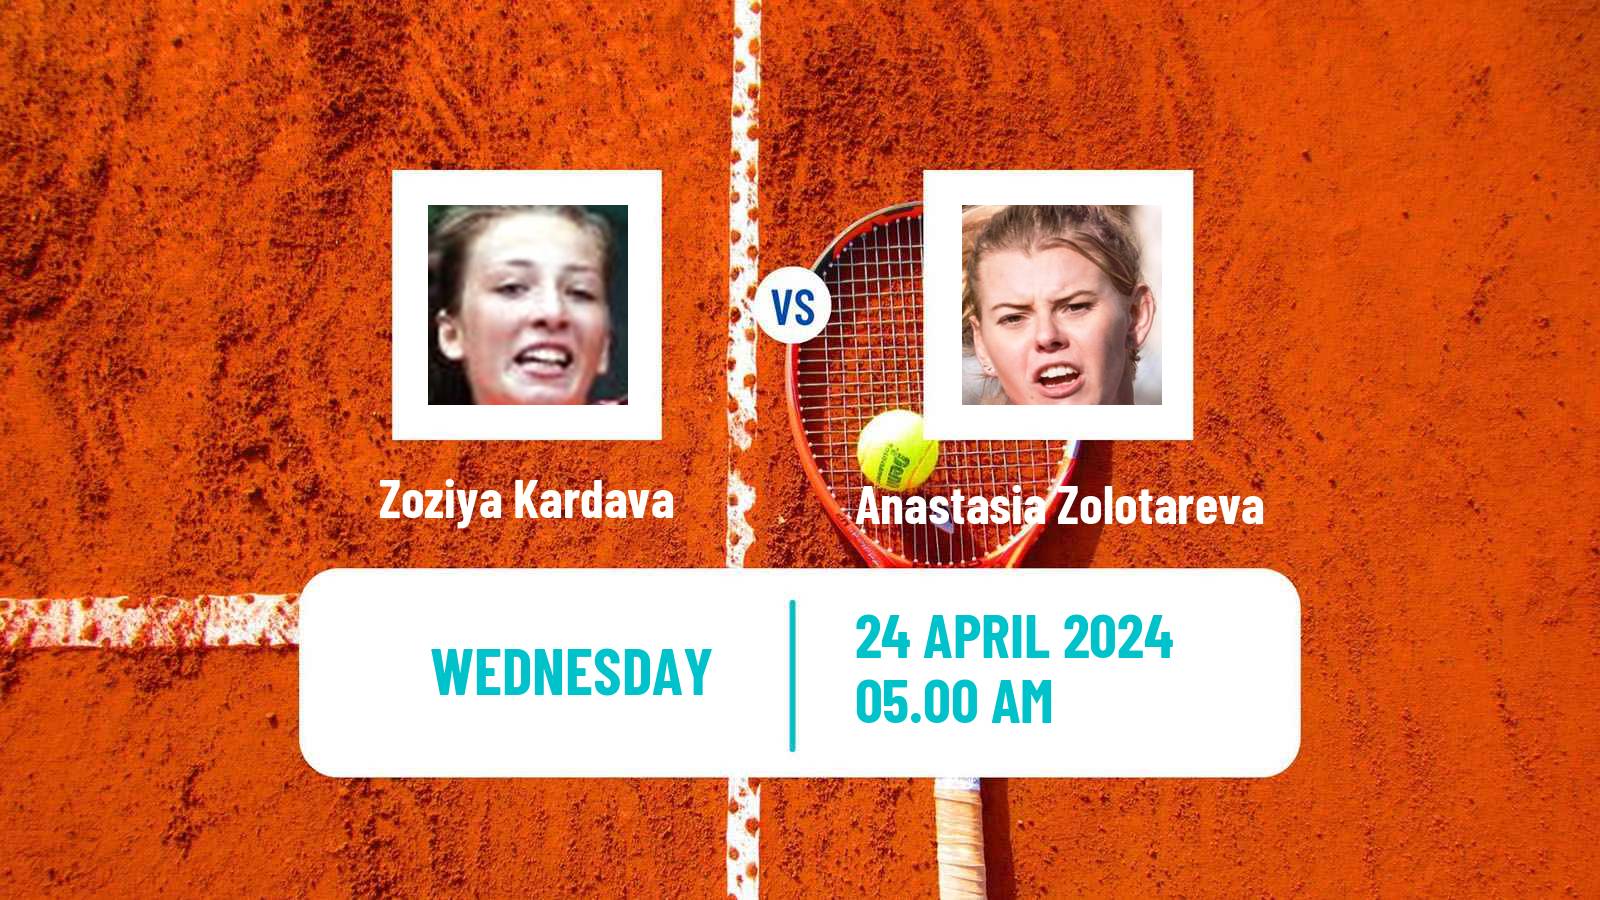 Tennis ITF W50 Lopota Women Zoziya Kardava - Anastasia Zolotareva